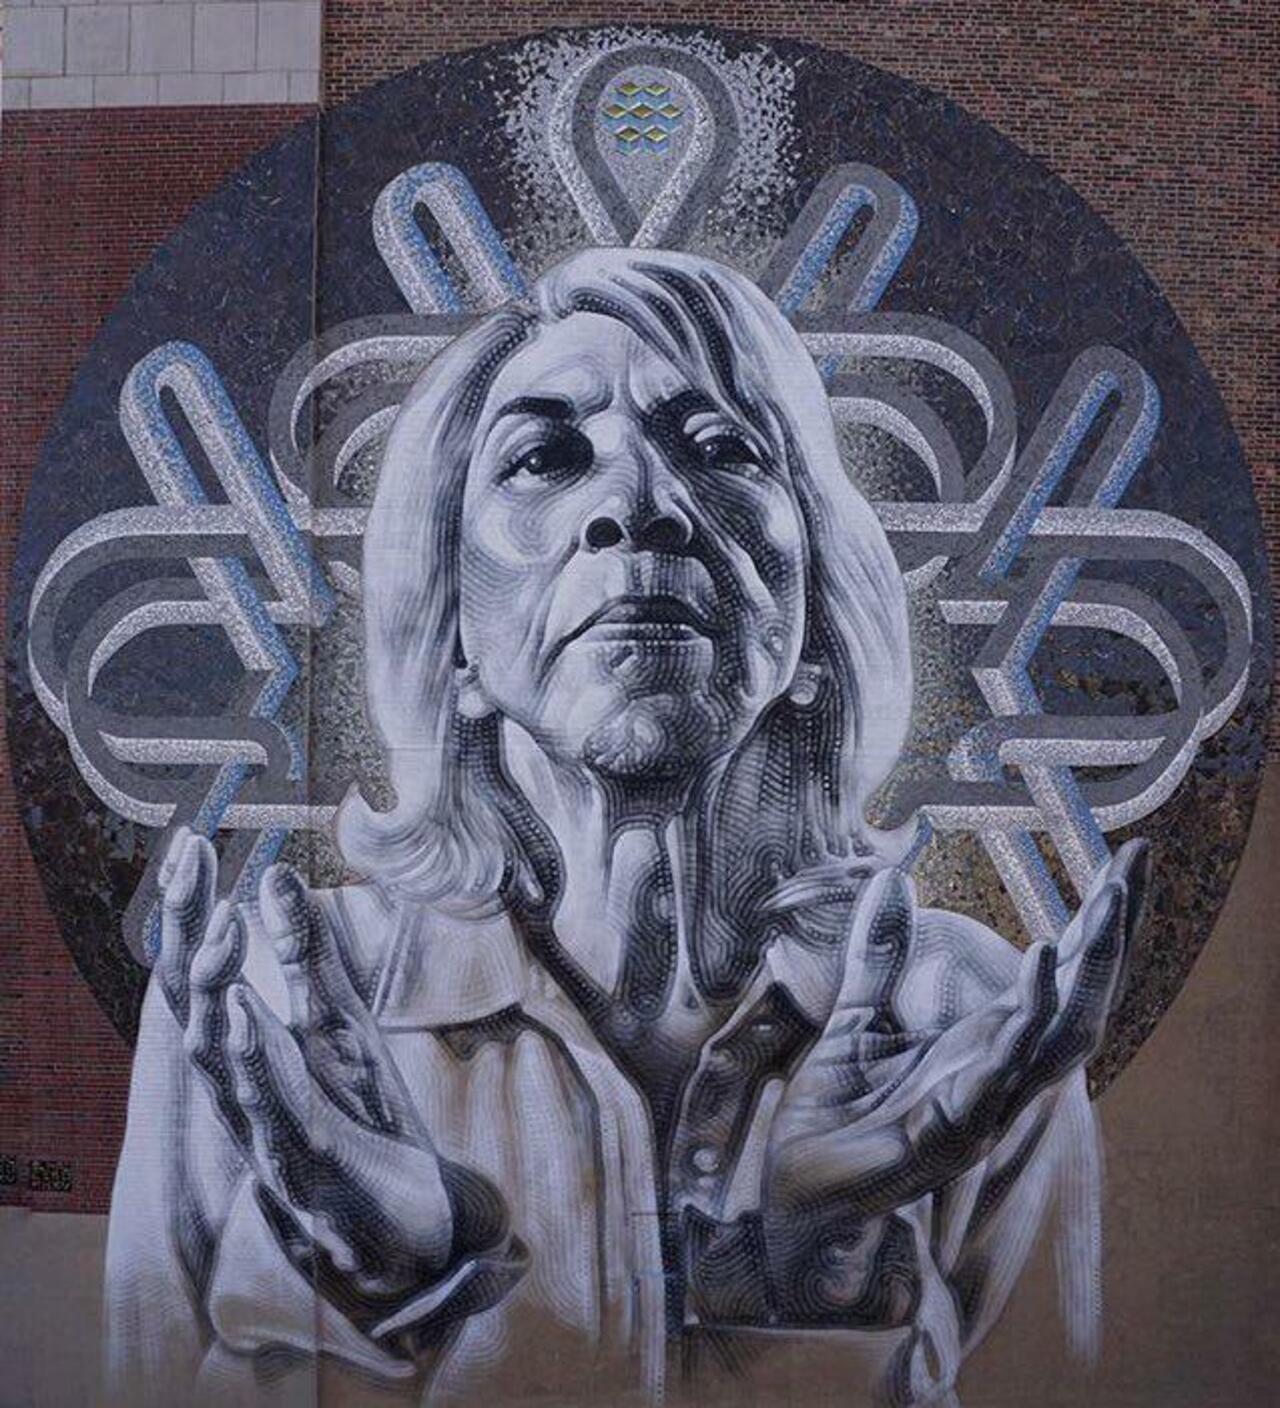 https://goo.gl/t4fpx2 New Street Art by El Mac 

#art #graffiti #mural #streetart https://t.co/R8TFu7GfFf